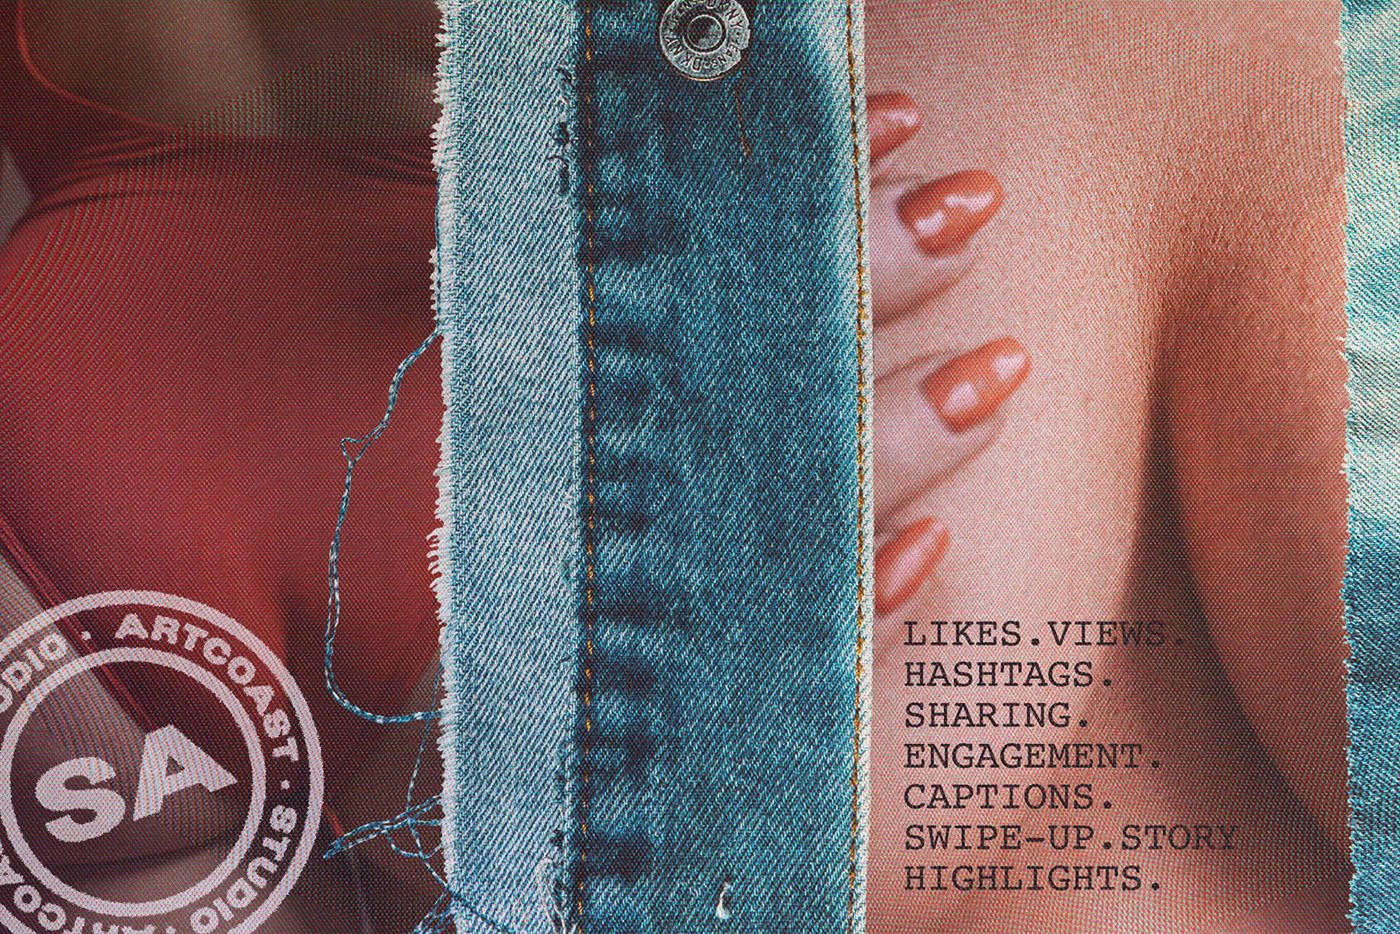 Denim jeans fashion design artwork texture background vintage brand identity Social media post